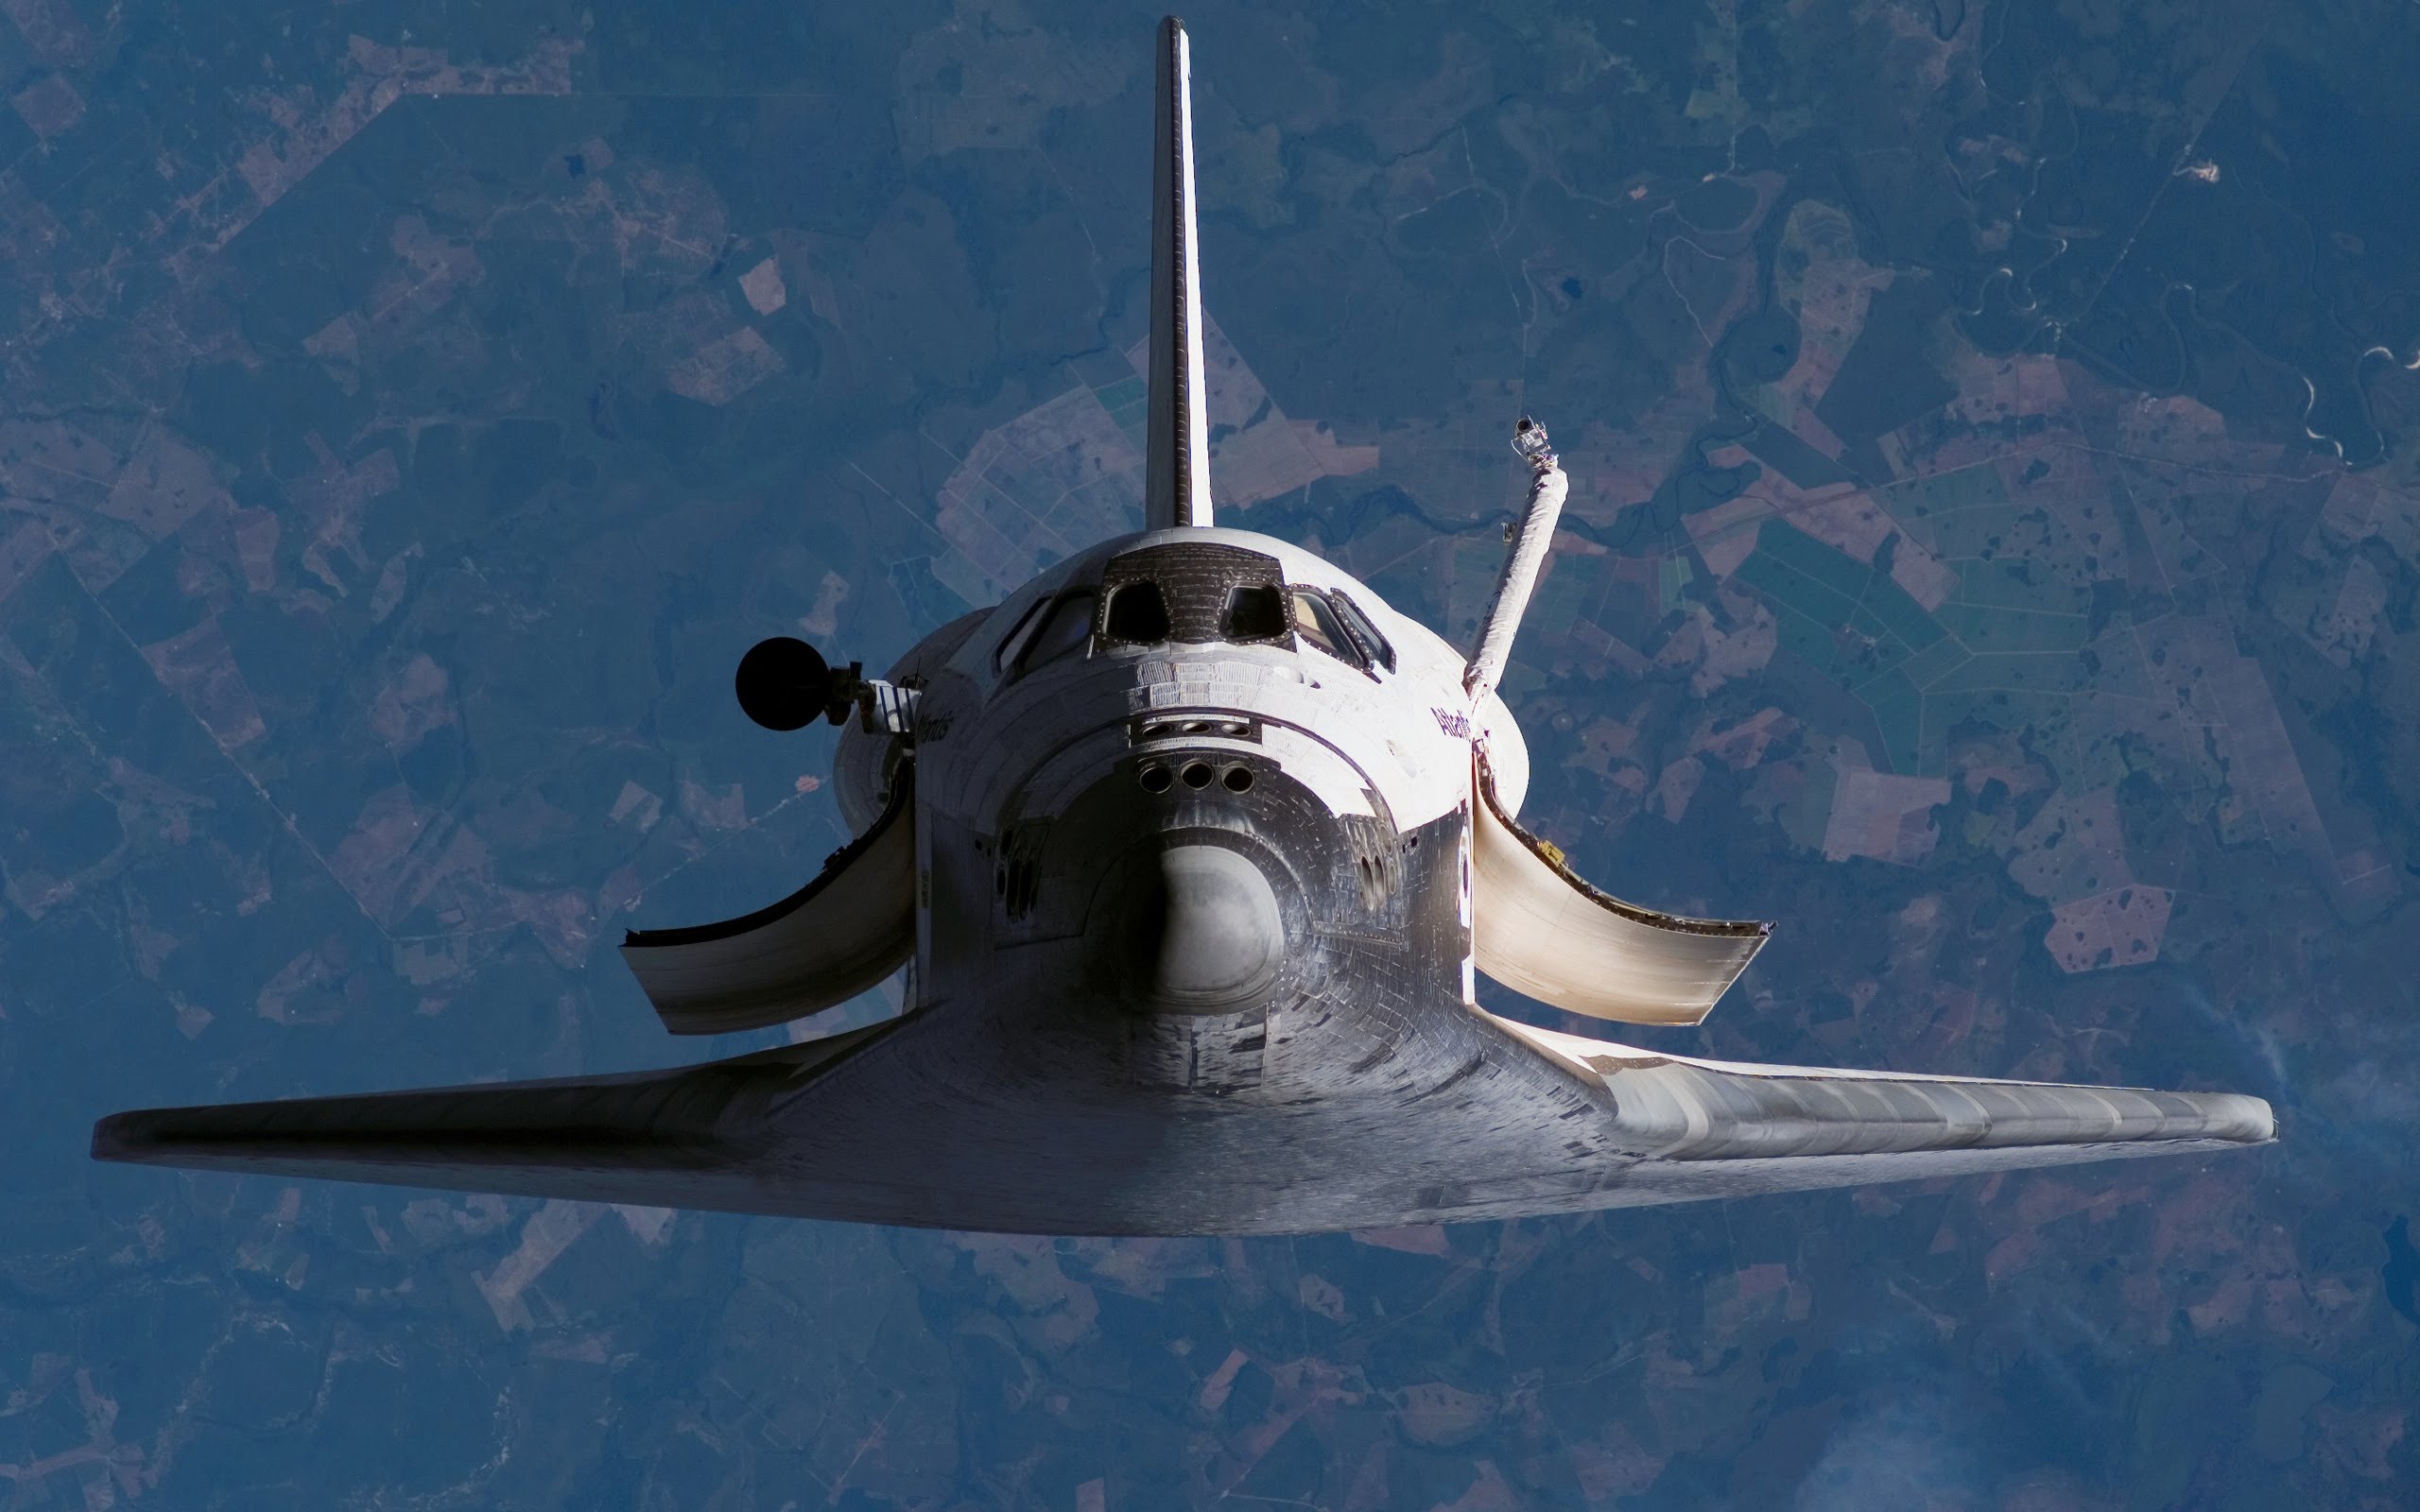 Kerbal Space Program | Space Shuttle Atlantis - YouTube